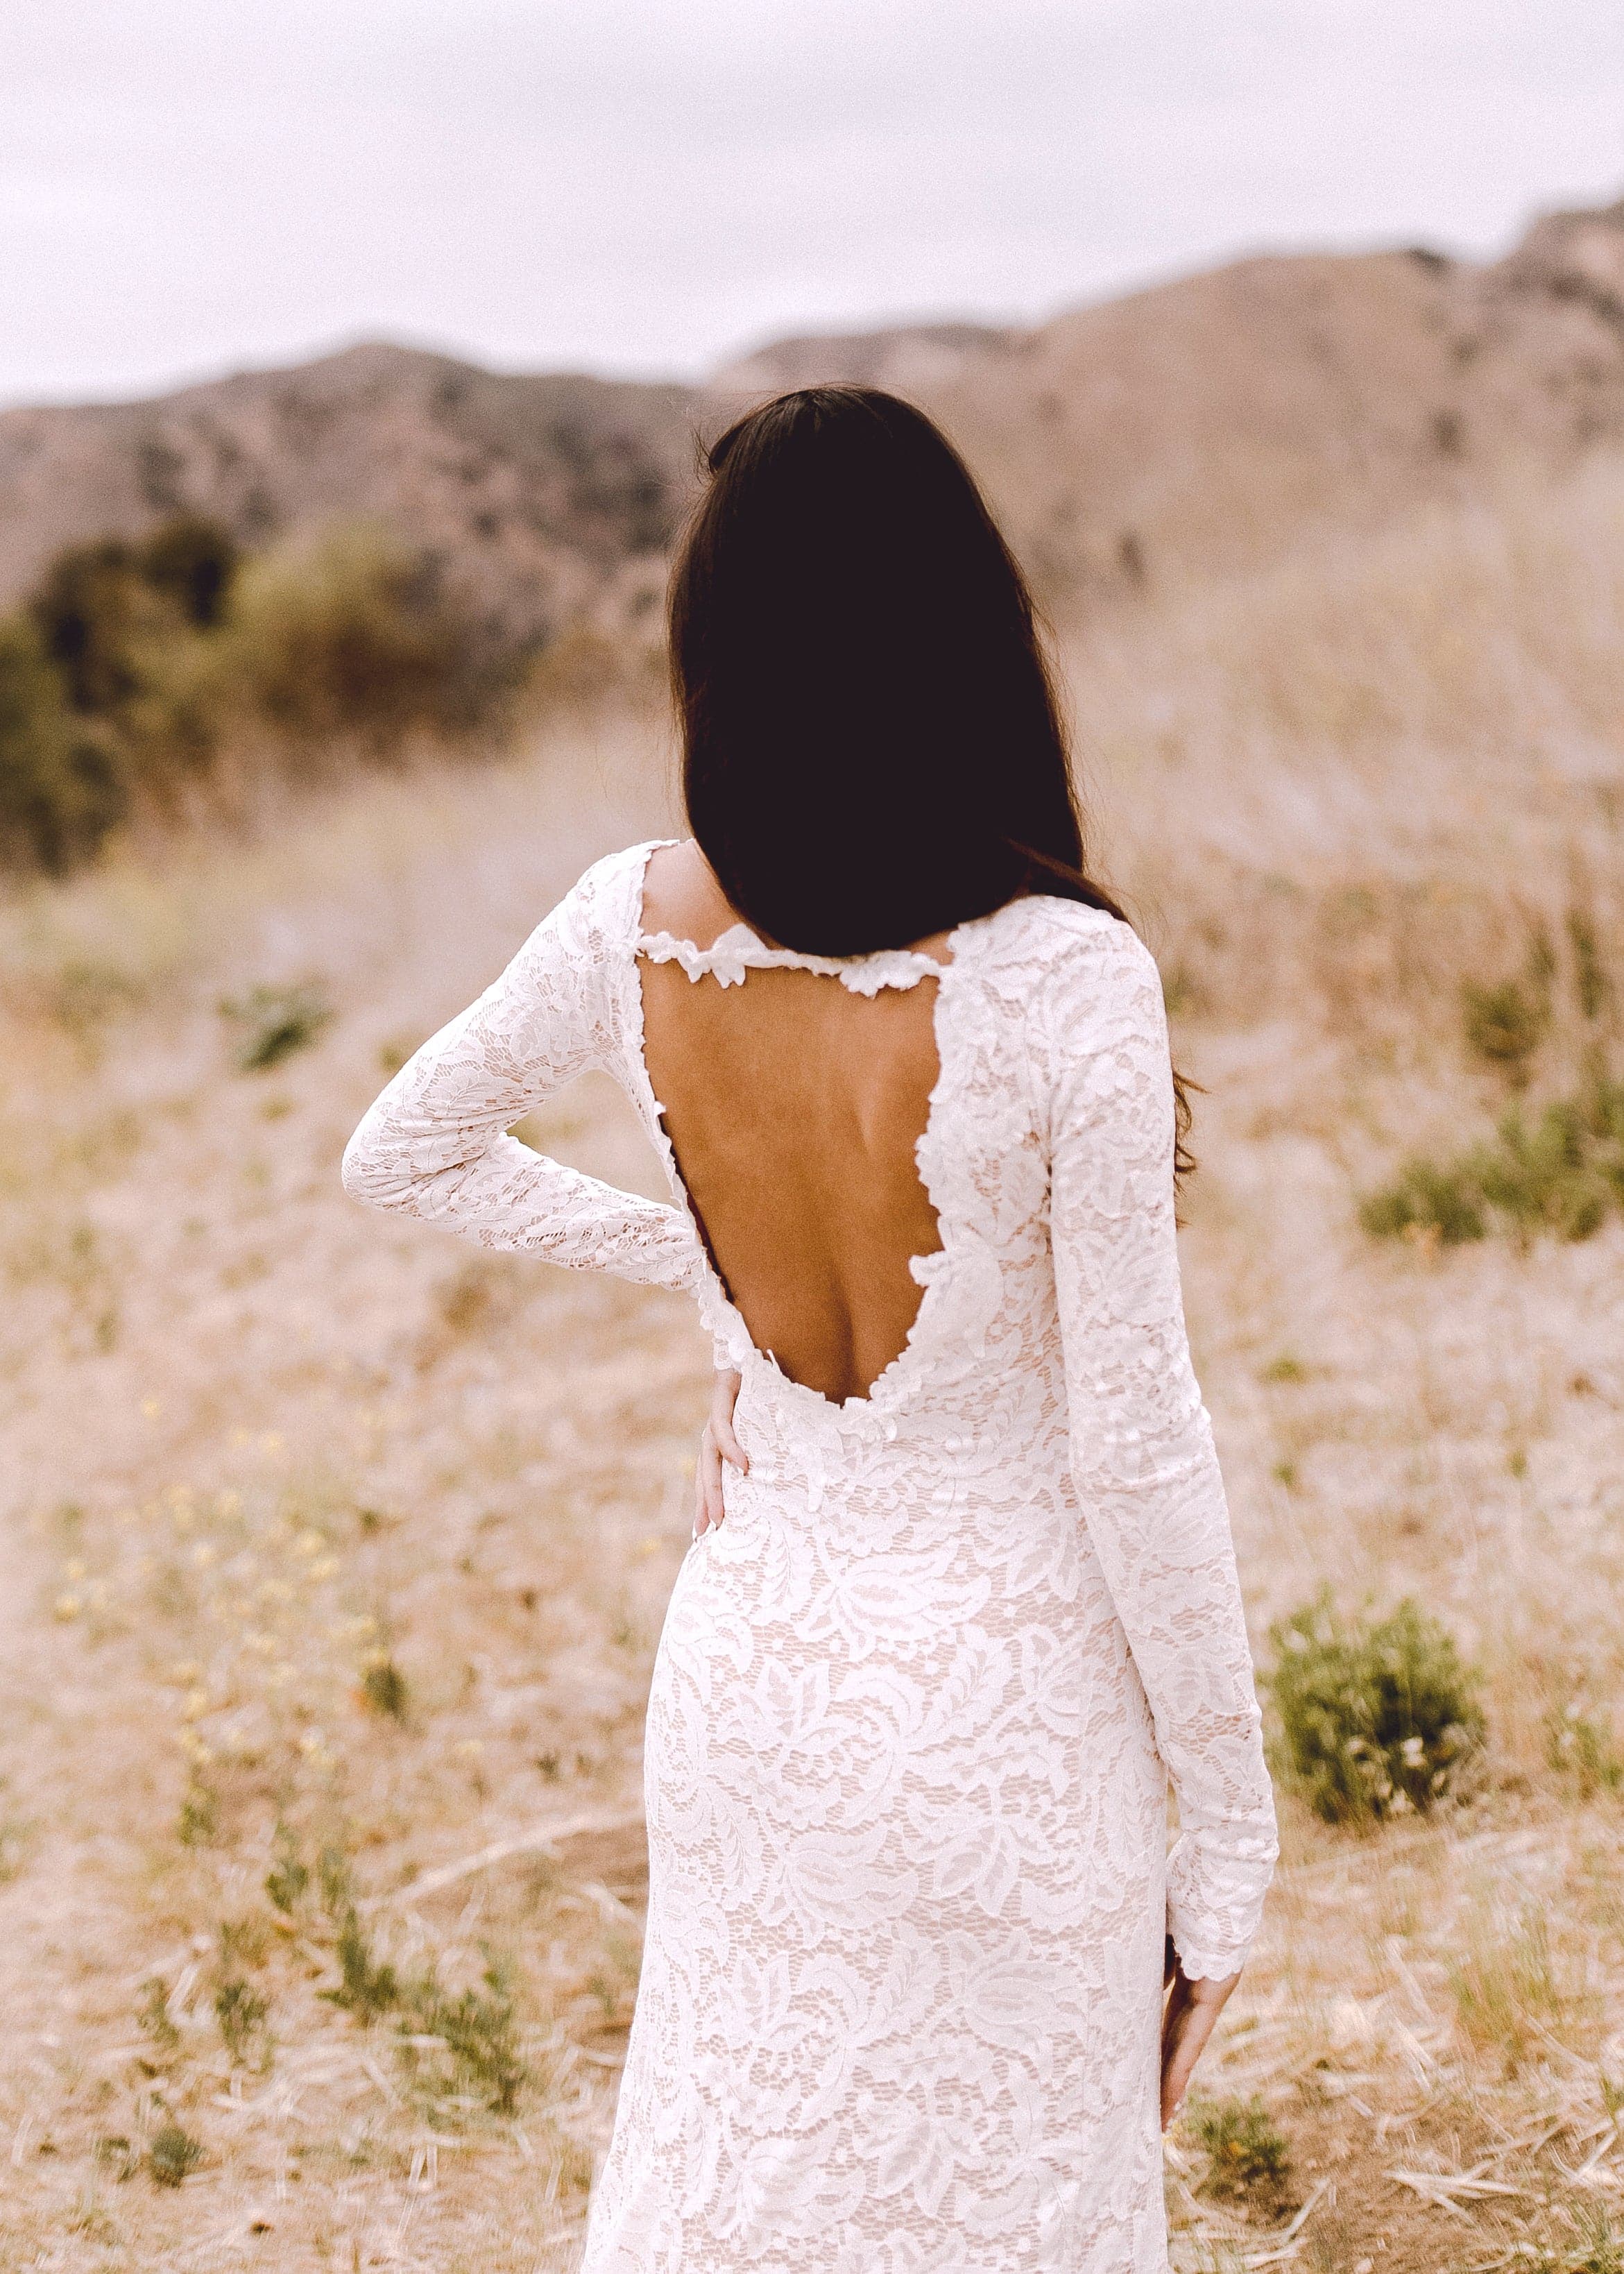 Julie, Long Sleeve Lace Wedding Dress